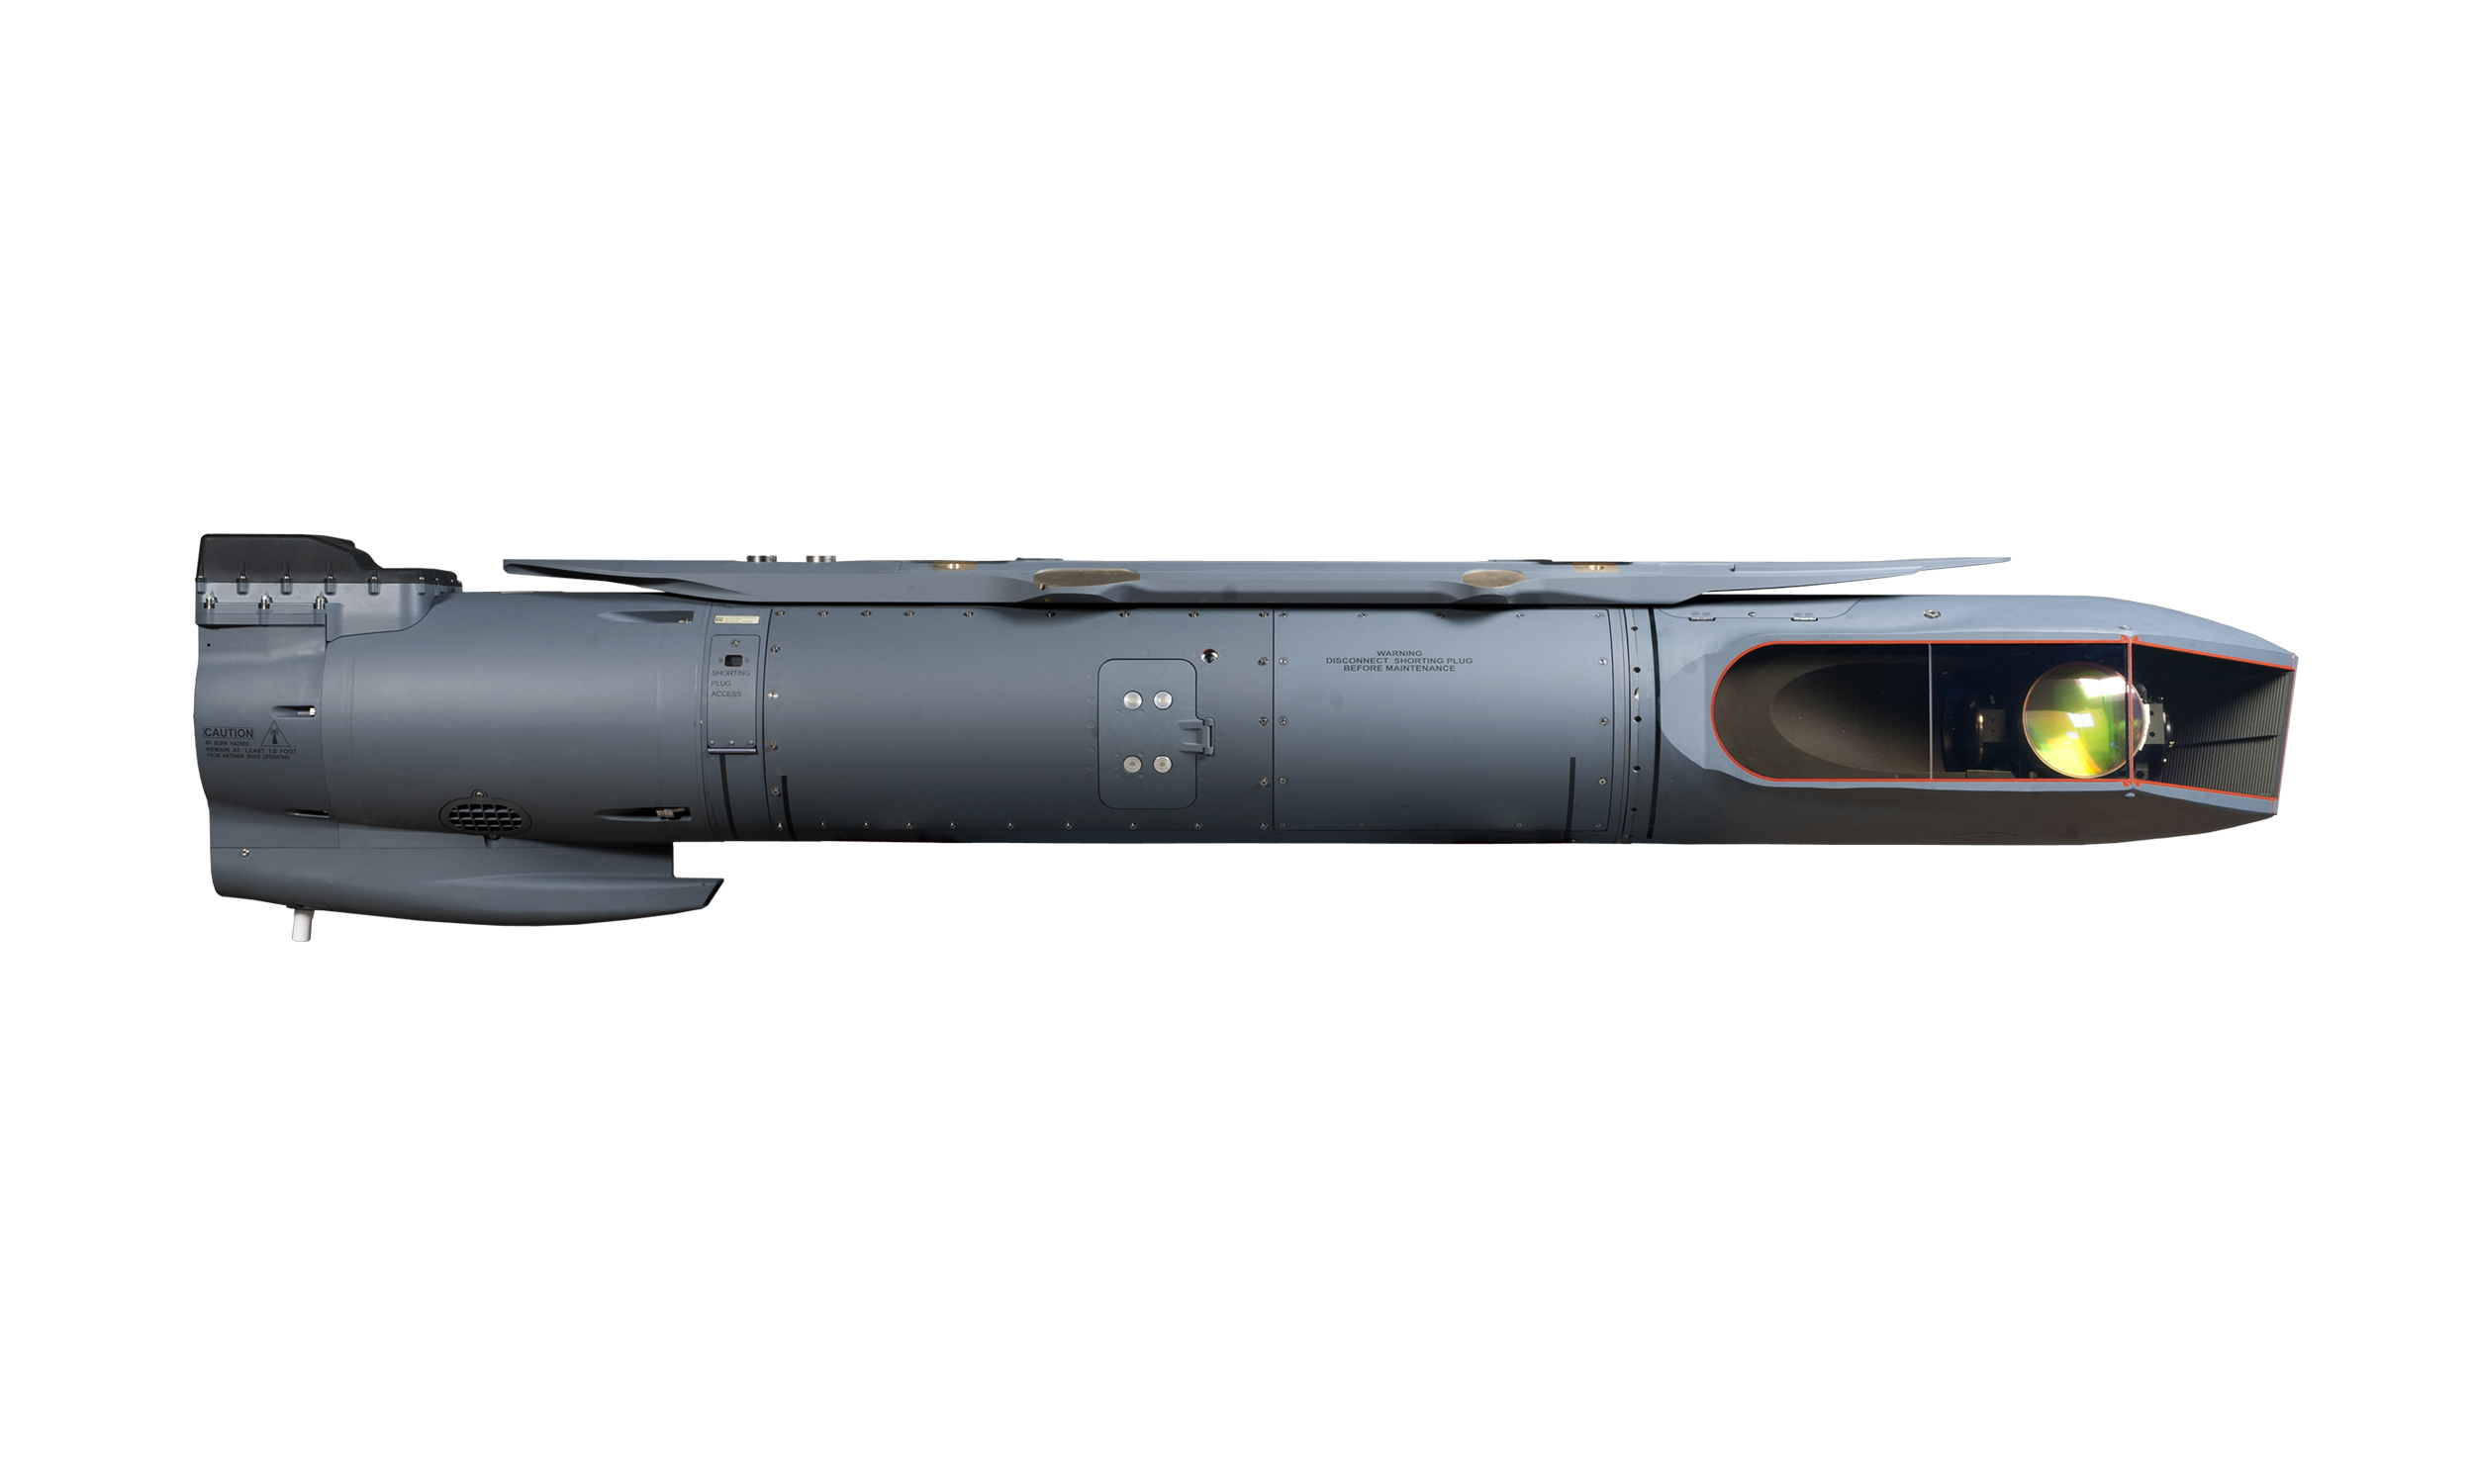 Lockheed Martin AN/AAQ-33 Sniper Advanced Targeting Pods